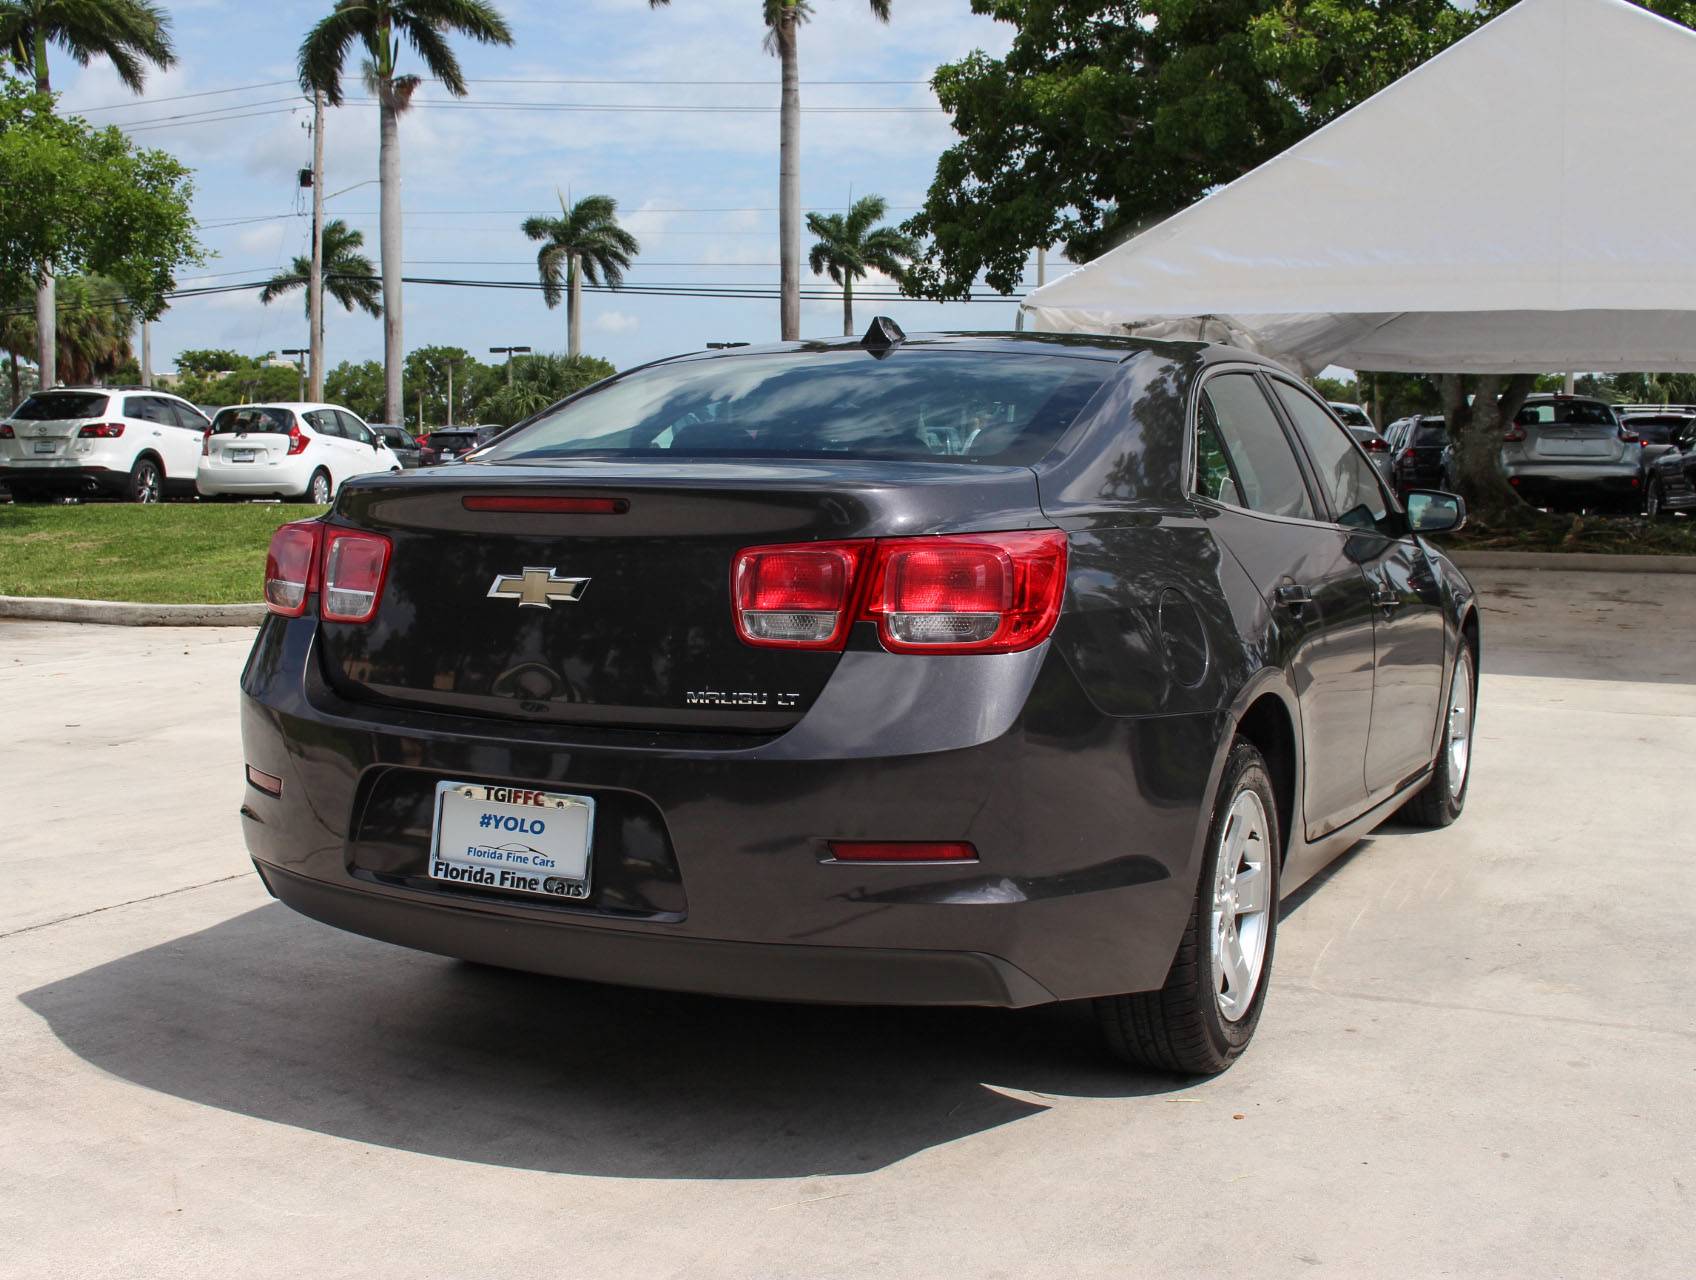 Florida Fine Cars - Used CHEVROLET MALIBU 2013 MARGATE 1LT